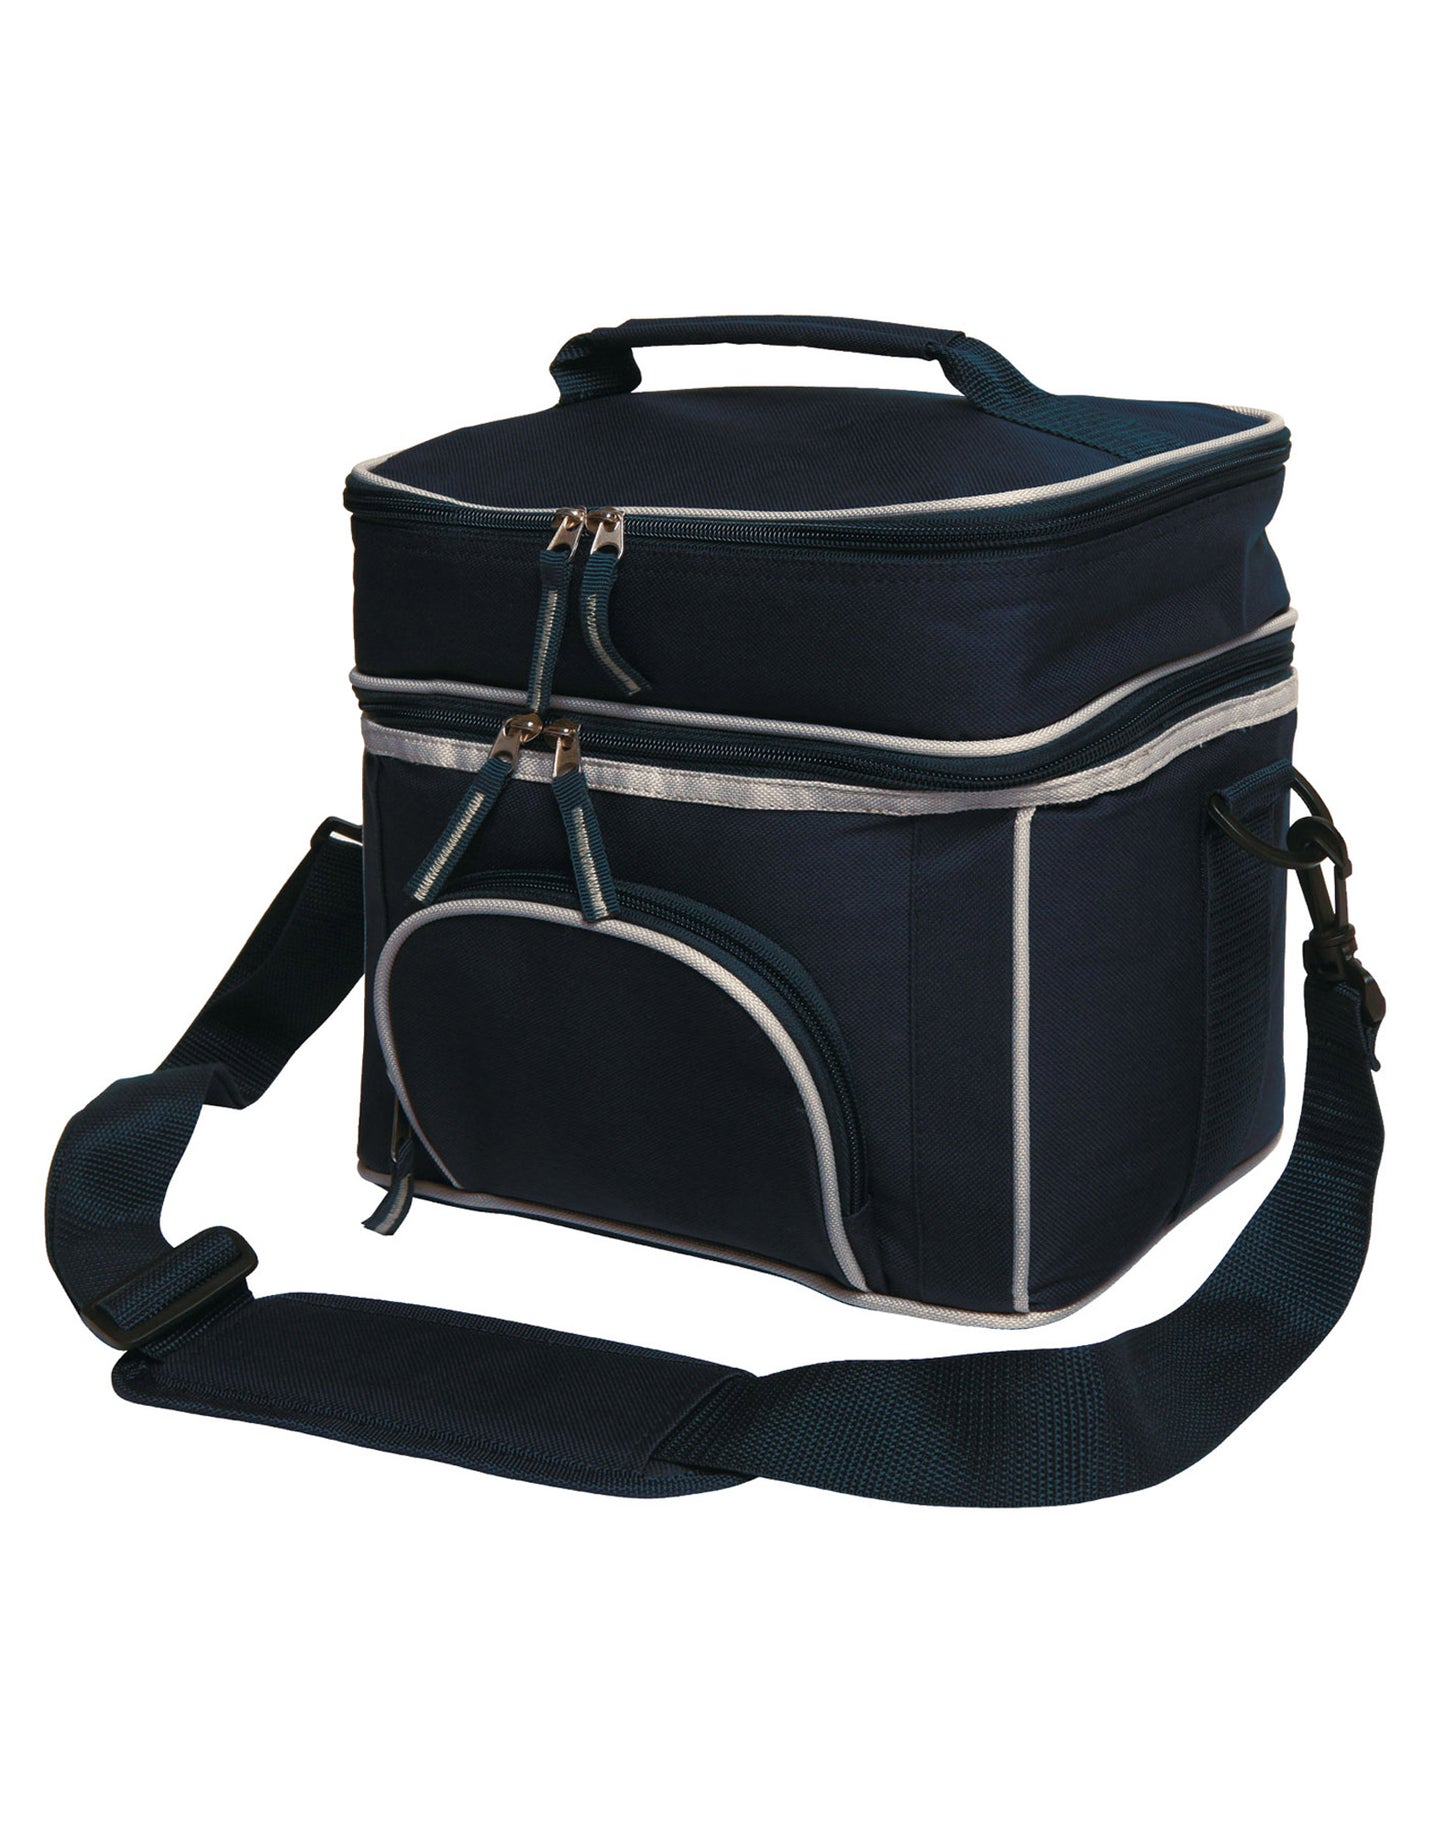 Winning Spirit- Travel Cooler Bag - Lunch/Picnic - B6002